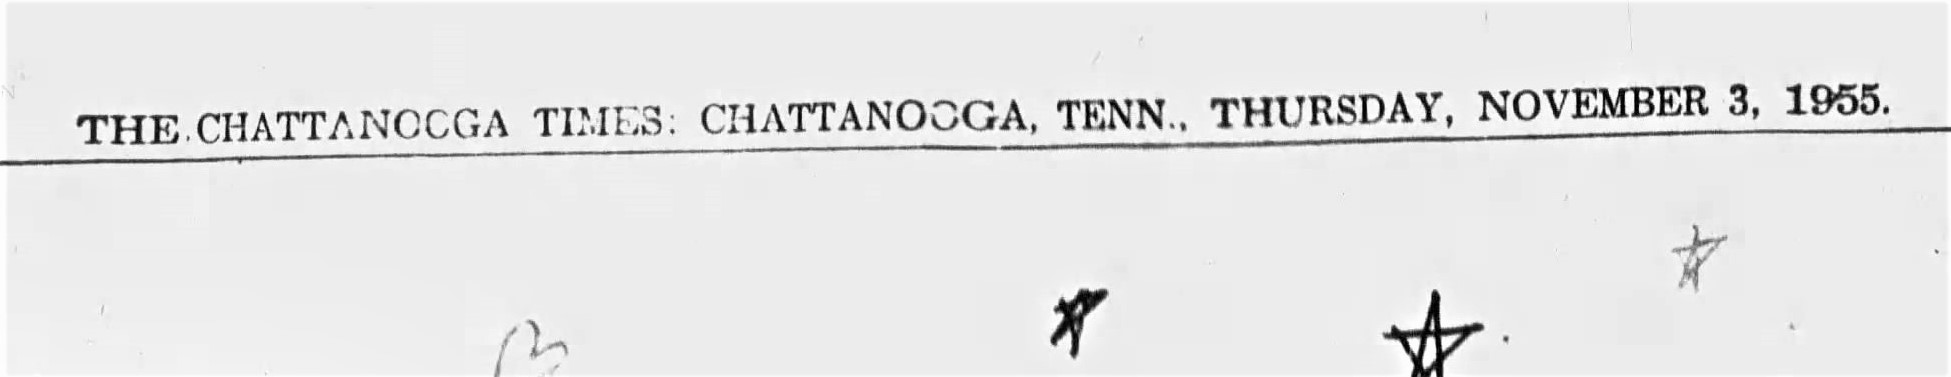 Orange Crush King Size Bottle_Chattanooga_Daily_Times_Tenn_Thu__Nov_3__1955.jpg